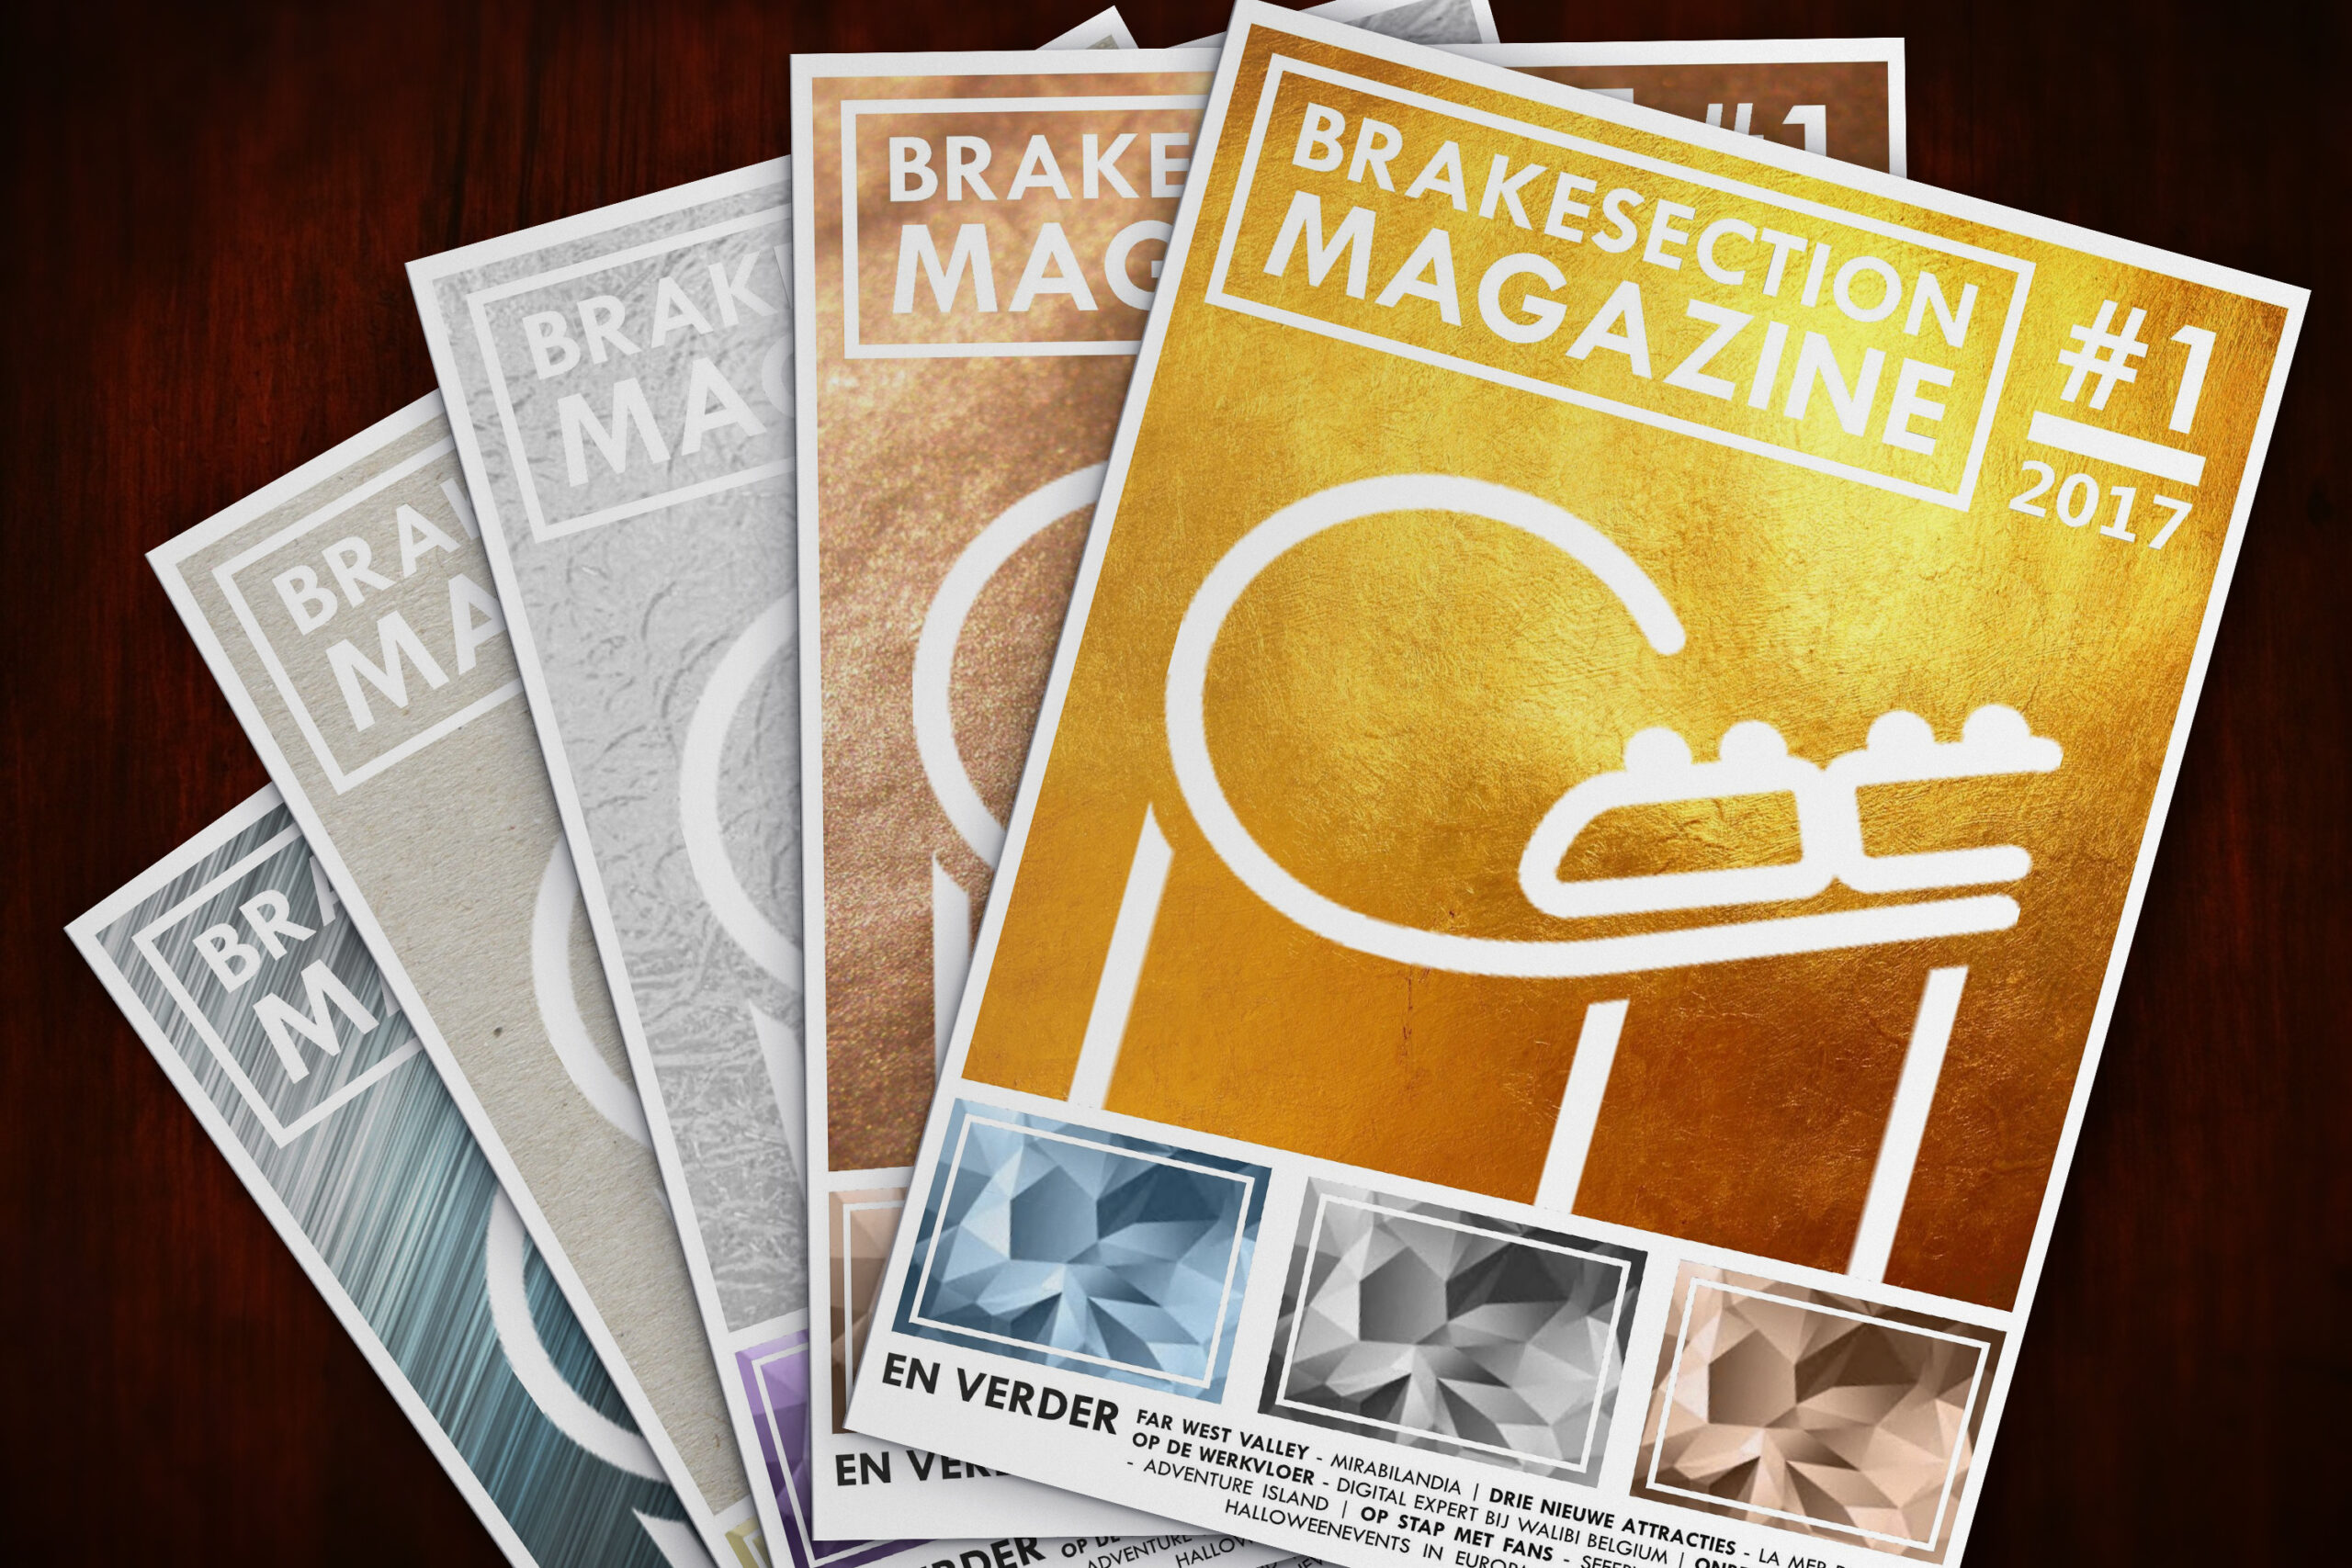 Bestel nu: Abonnement Brakesection Magazine Jaargang 5 verkrijgbaar!